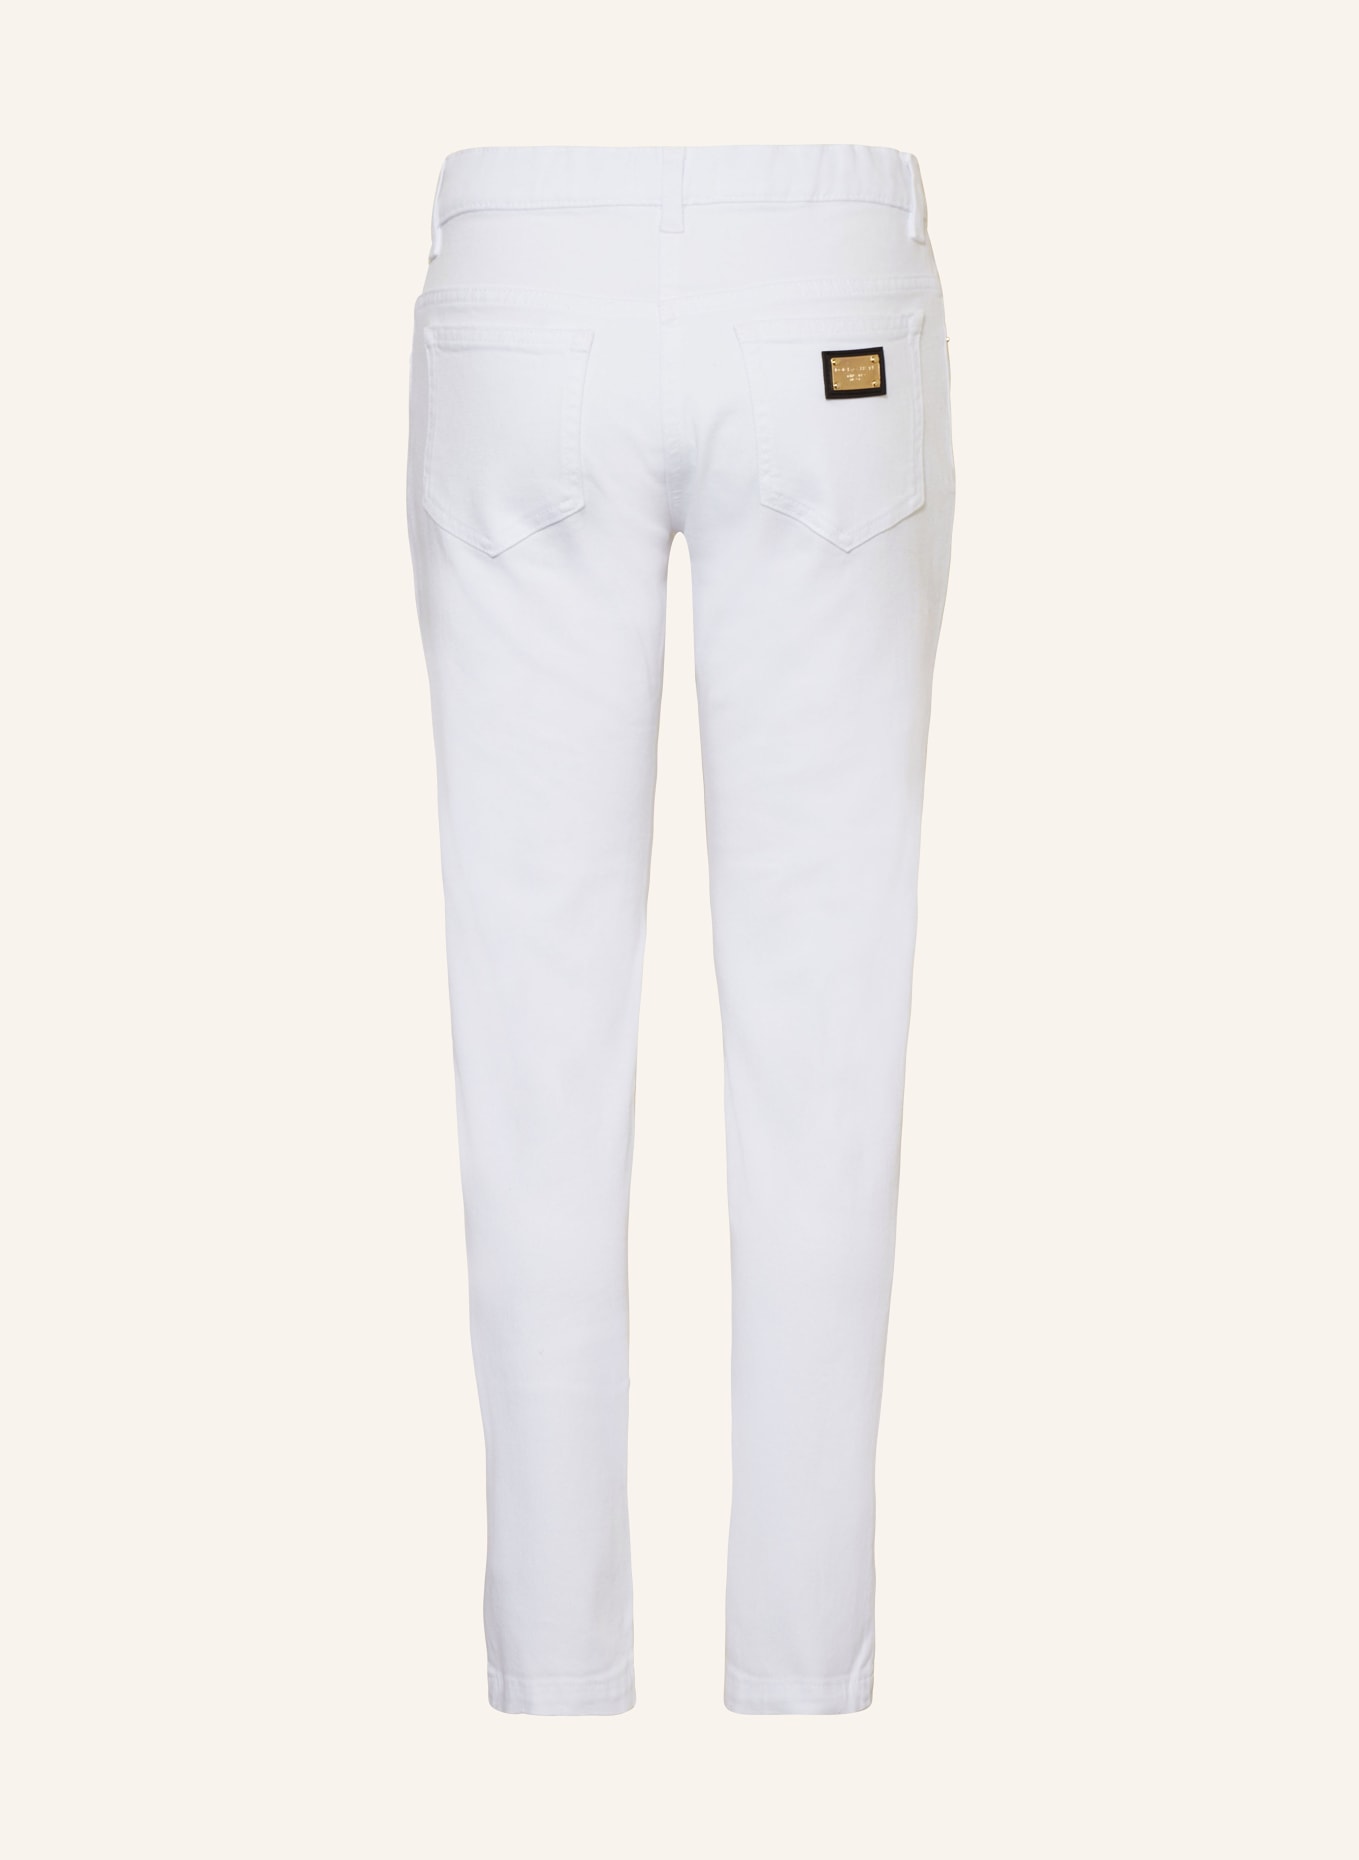 DOLCE & GABBANA Jeans, Farbe: S9000 VARIANTE ABBINATA (Bild 2)